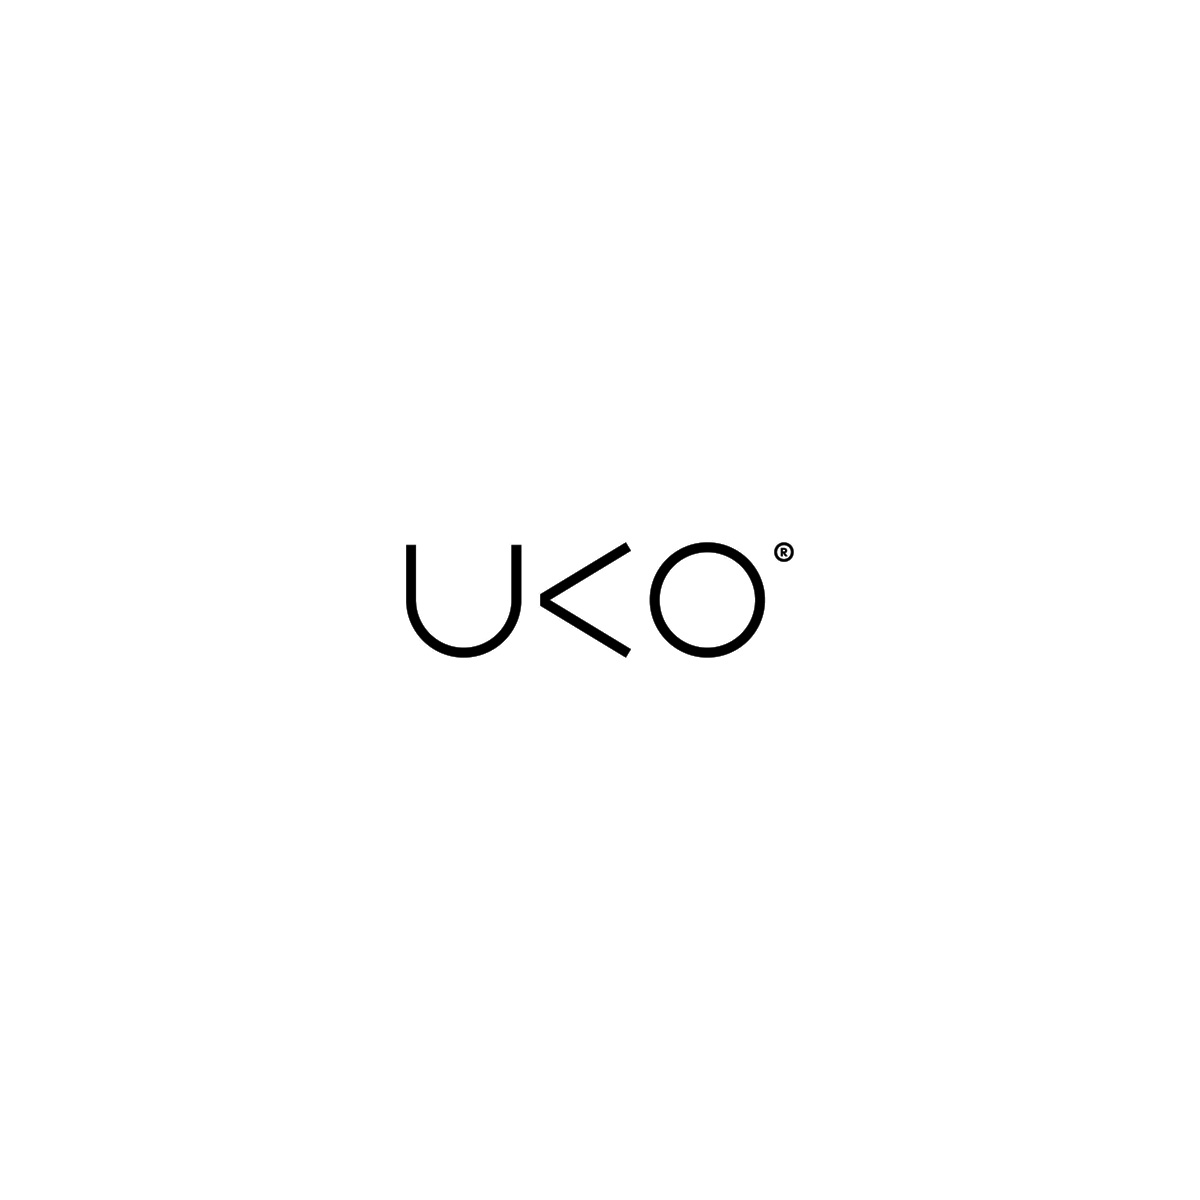 uko | Jxsn Films